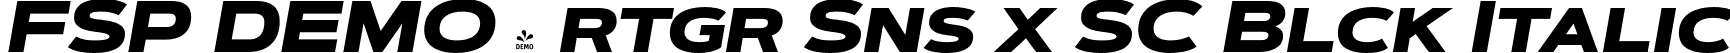 FSP DEMO - rtgr Sns x SC Blck Italic font - Fontspring-DEMO-artegra_sans-extended-sc-900-black-italic.otf